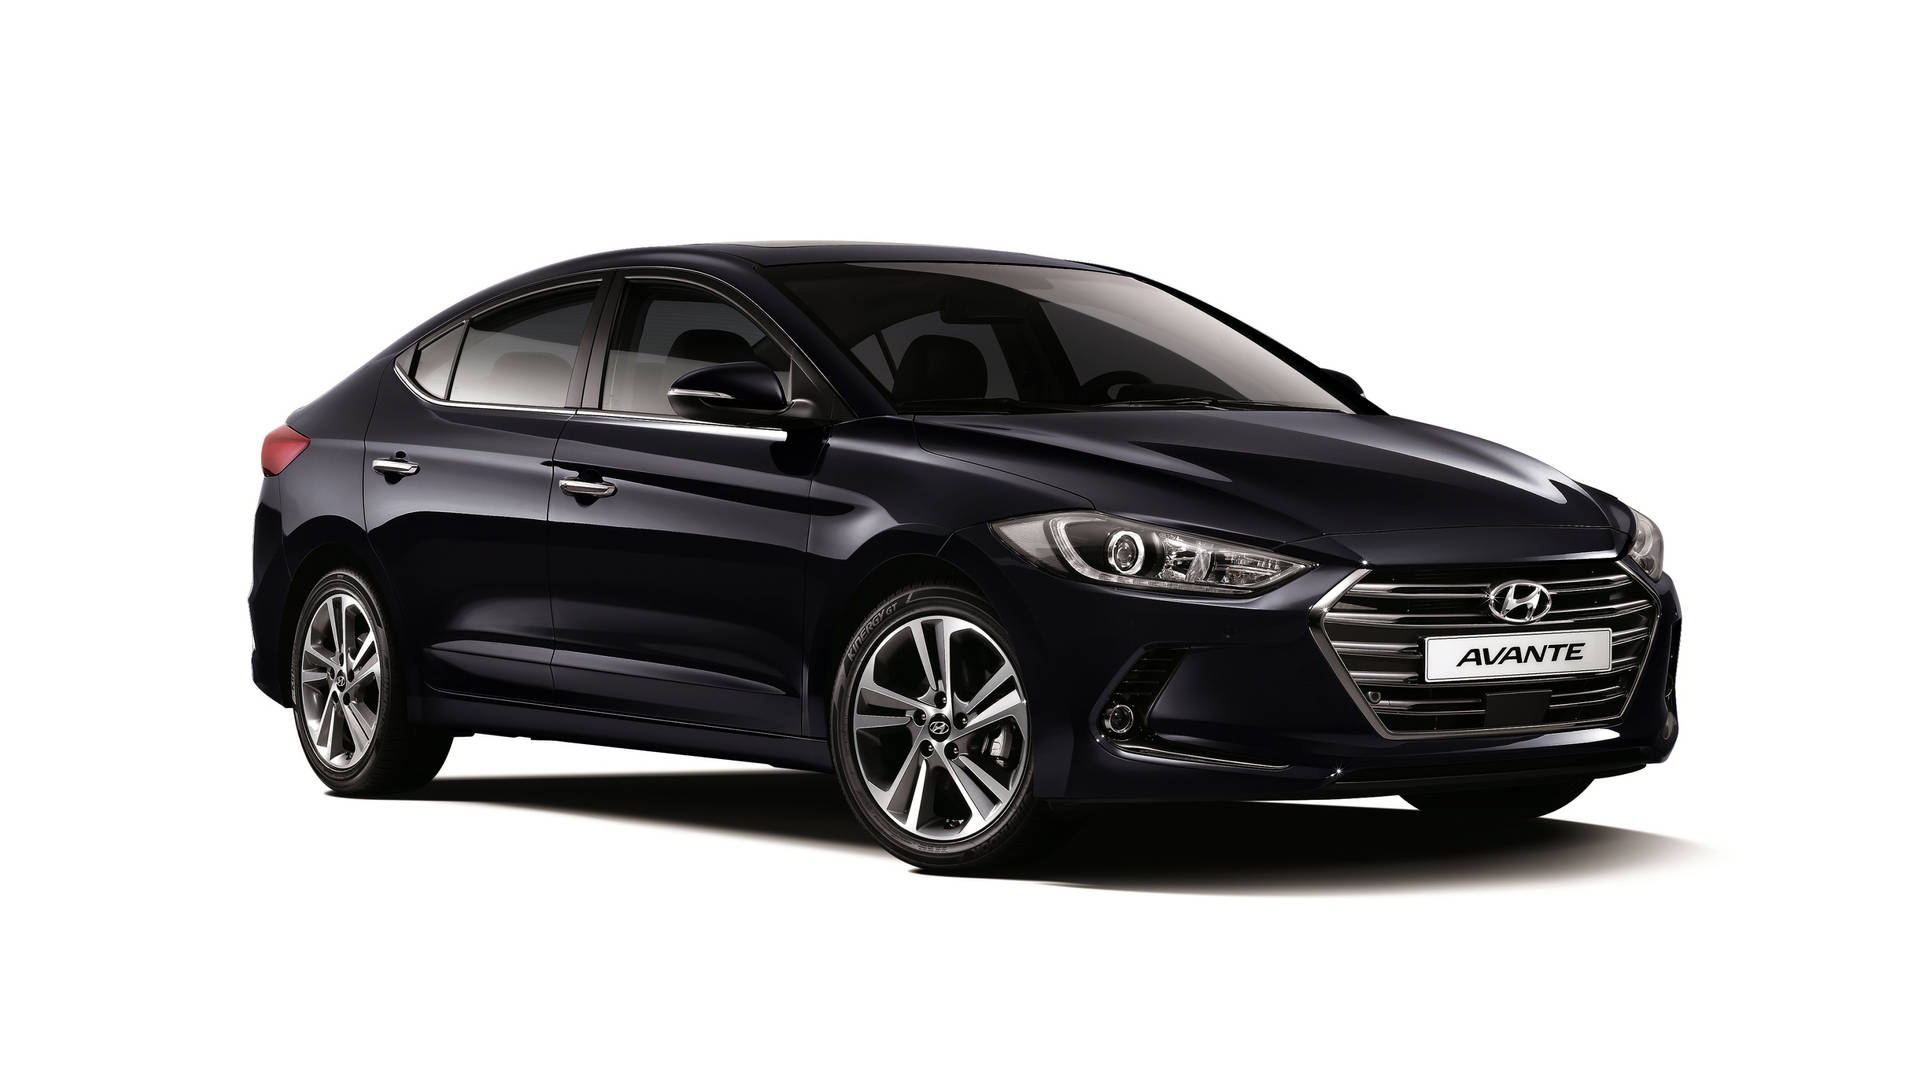 Shiny Black Hyundai Avante Background